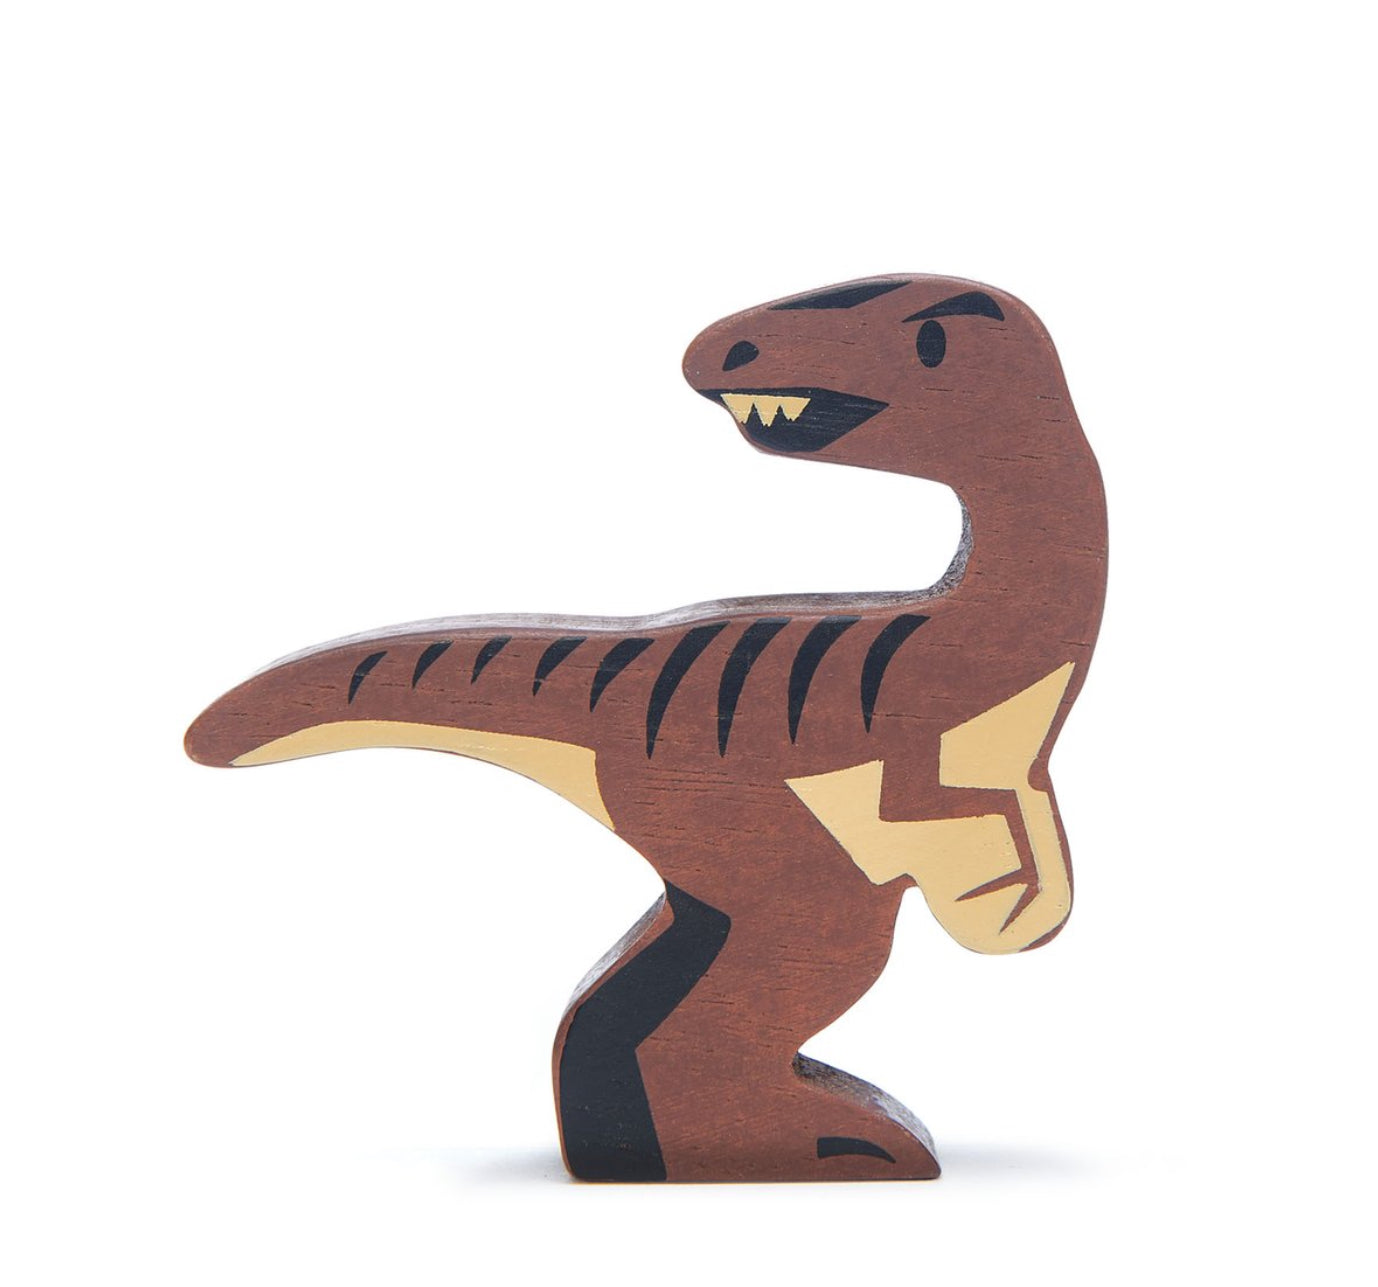 Tender leaf Toys Velociraptor Wooden Dinosaur Toy